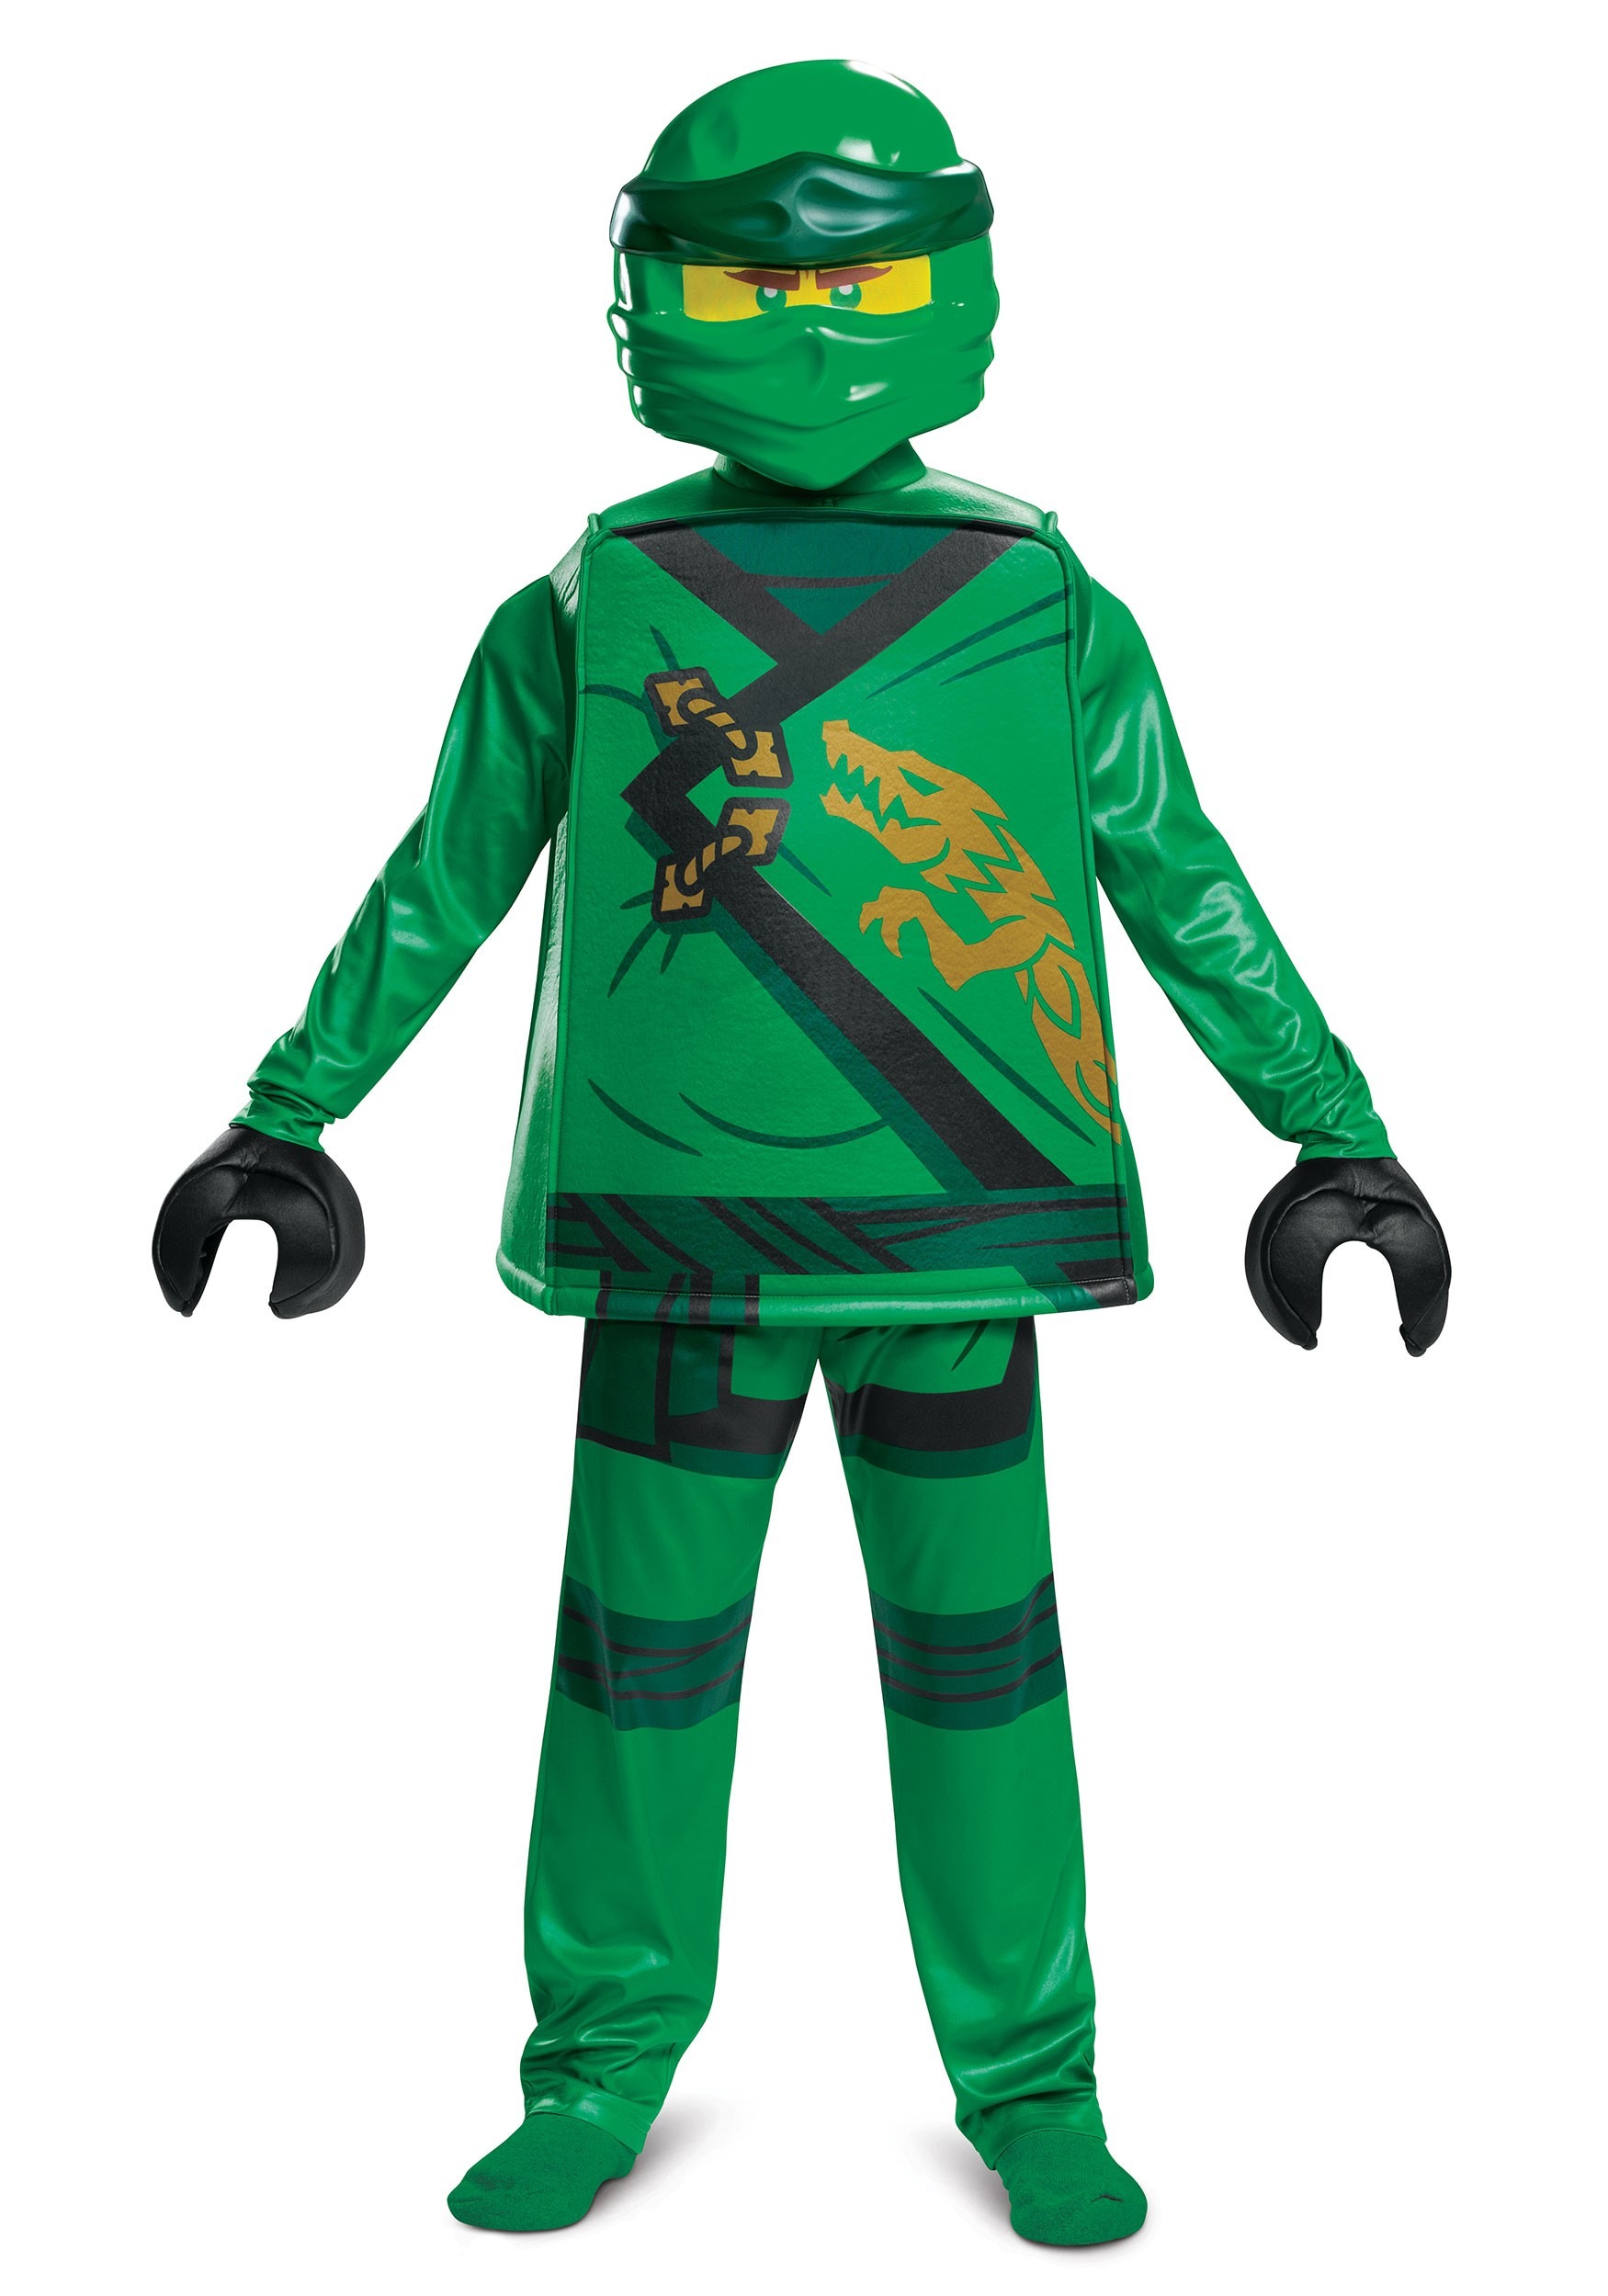 Lego Ninjago Lloyd Legacy Deluxe Costume for Kids